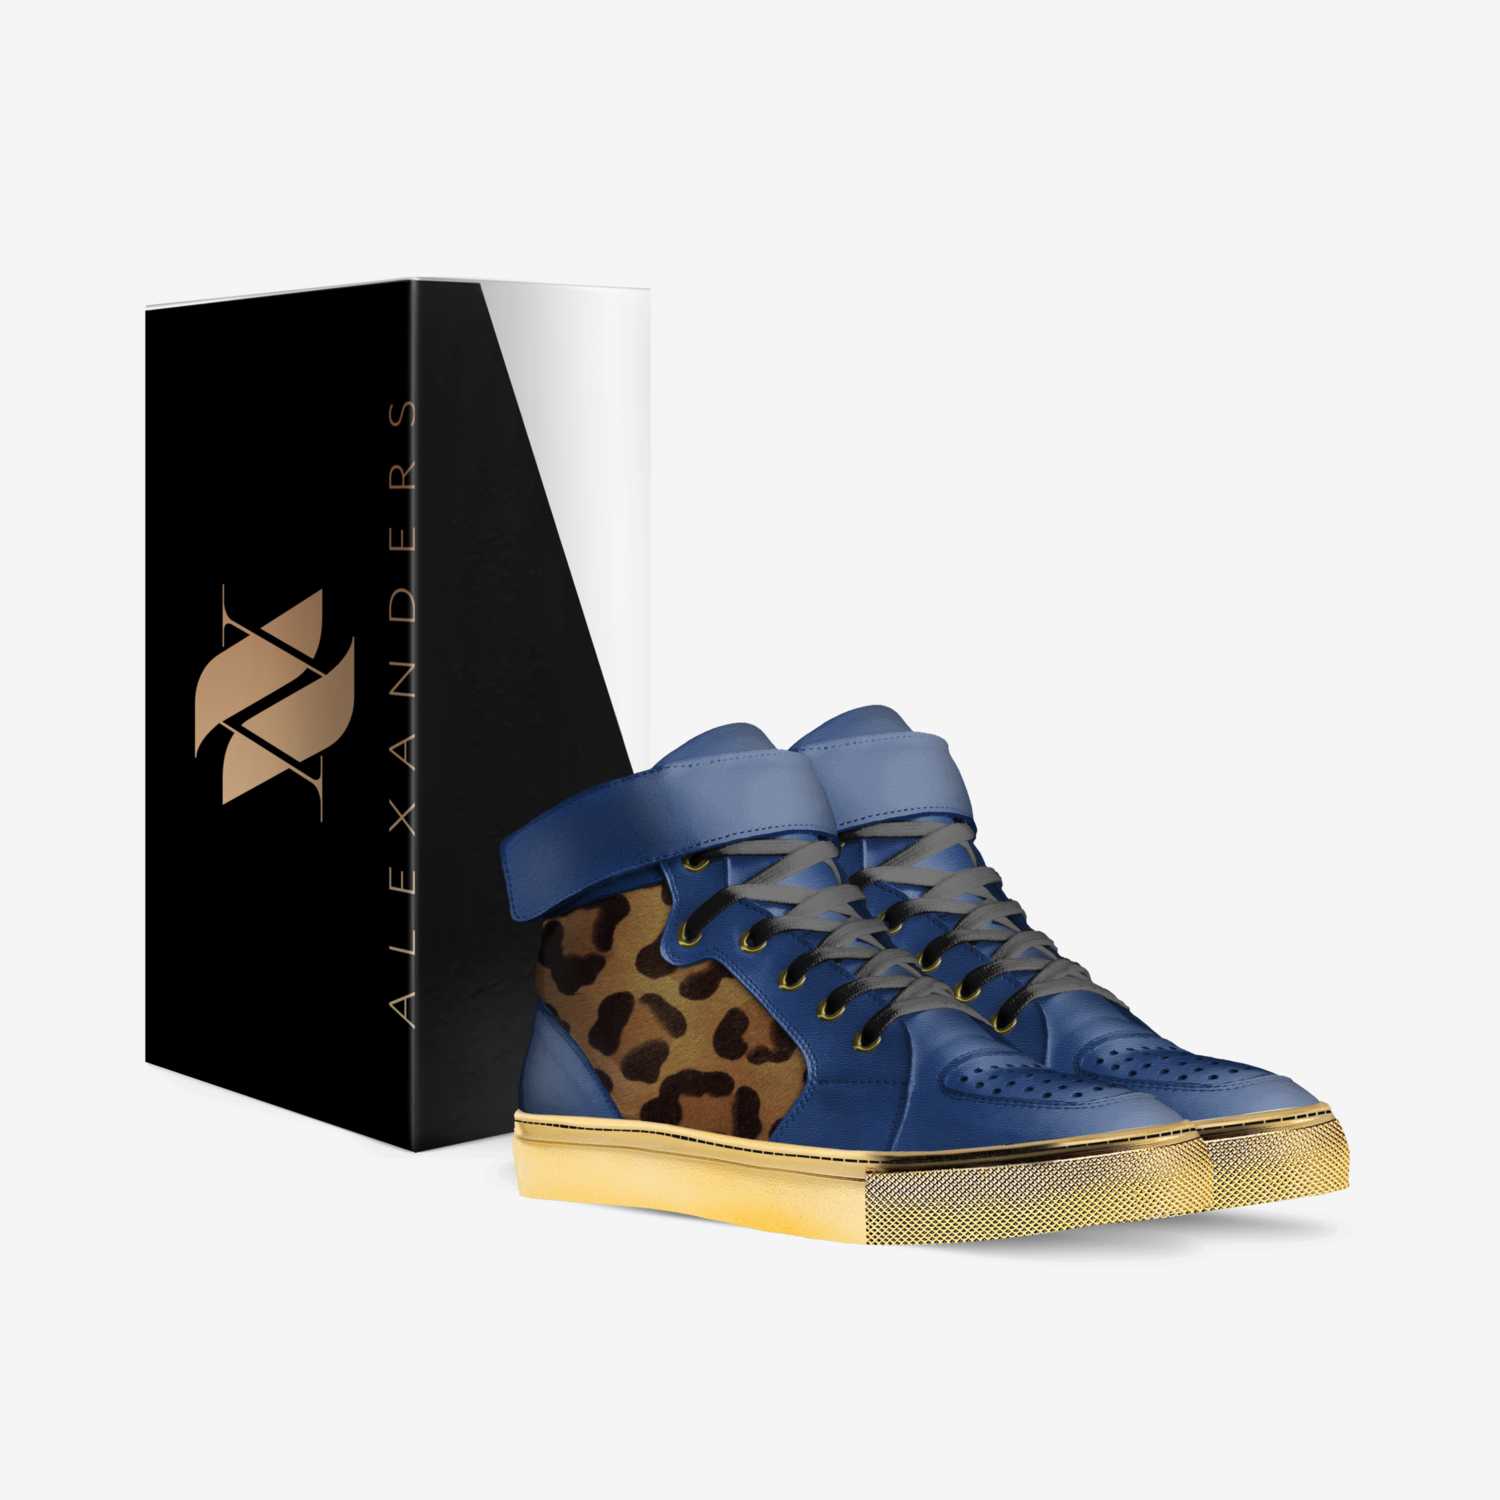 Alexanders  custom made in Italy shoes by Darius Alexander | Box view